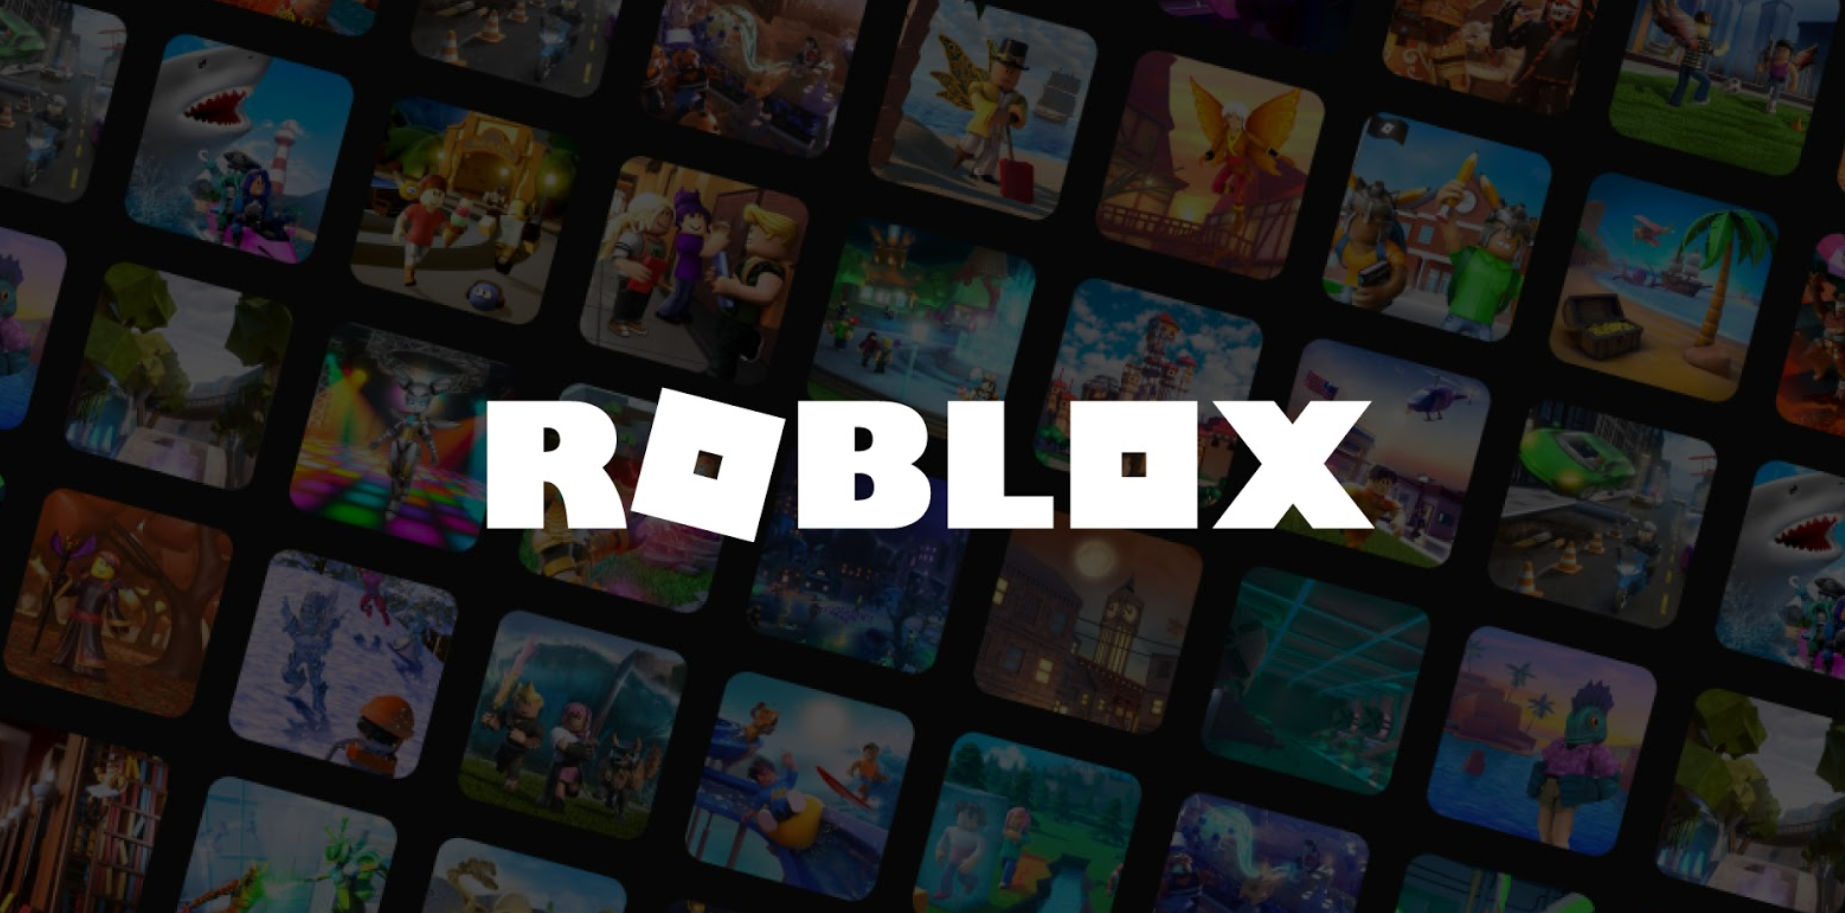 Roblox: concertos virtuais podem vir a ser o futuro da música